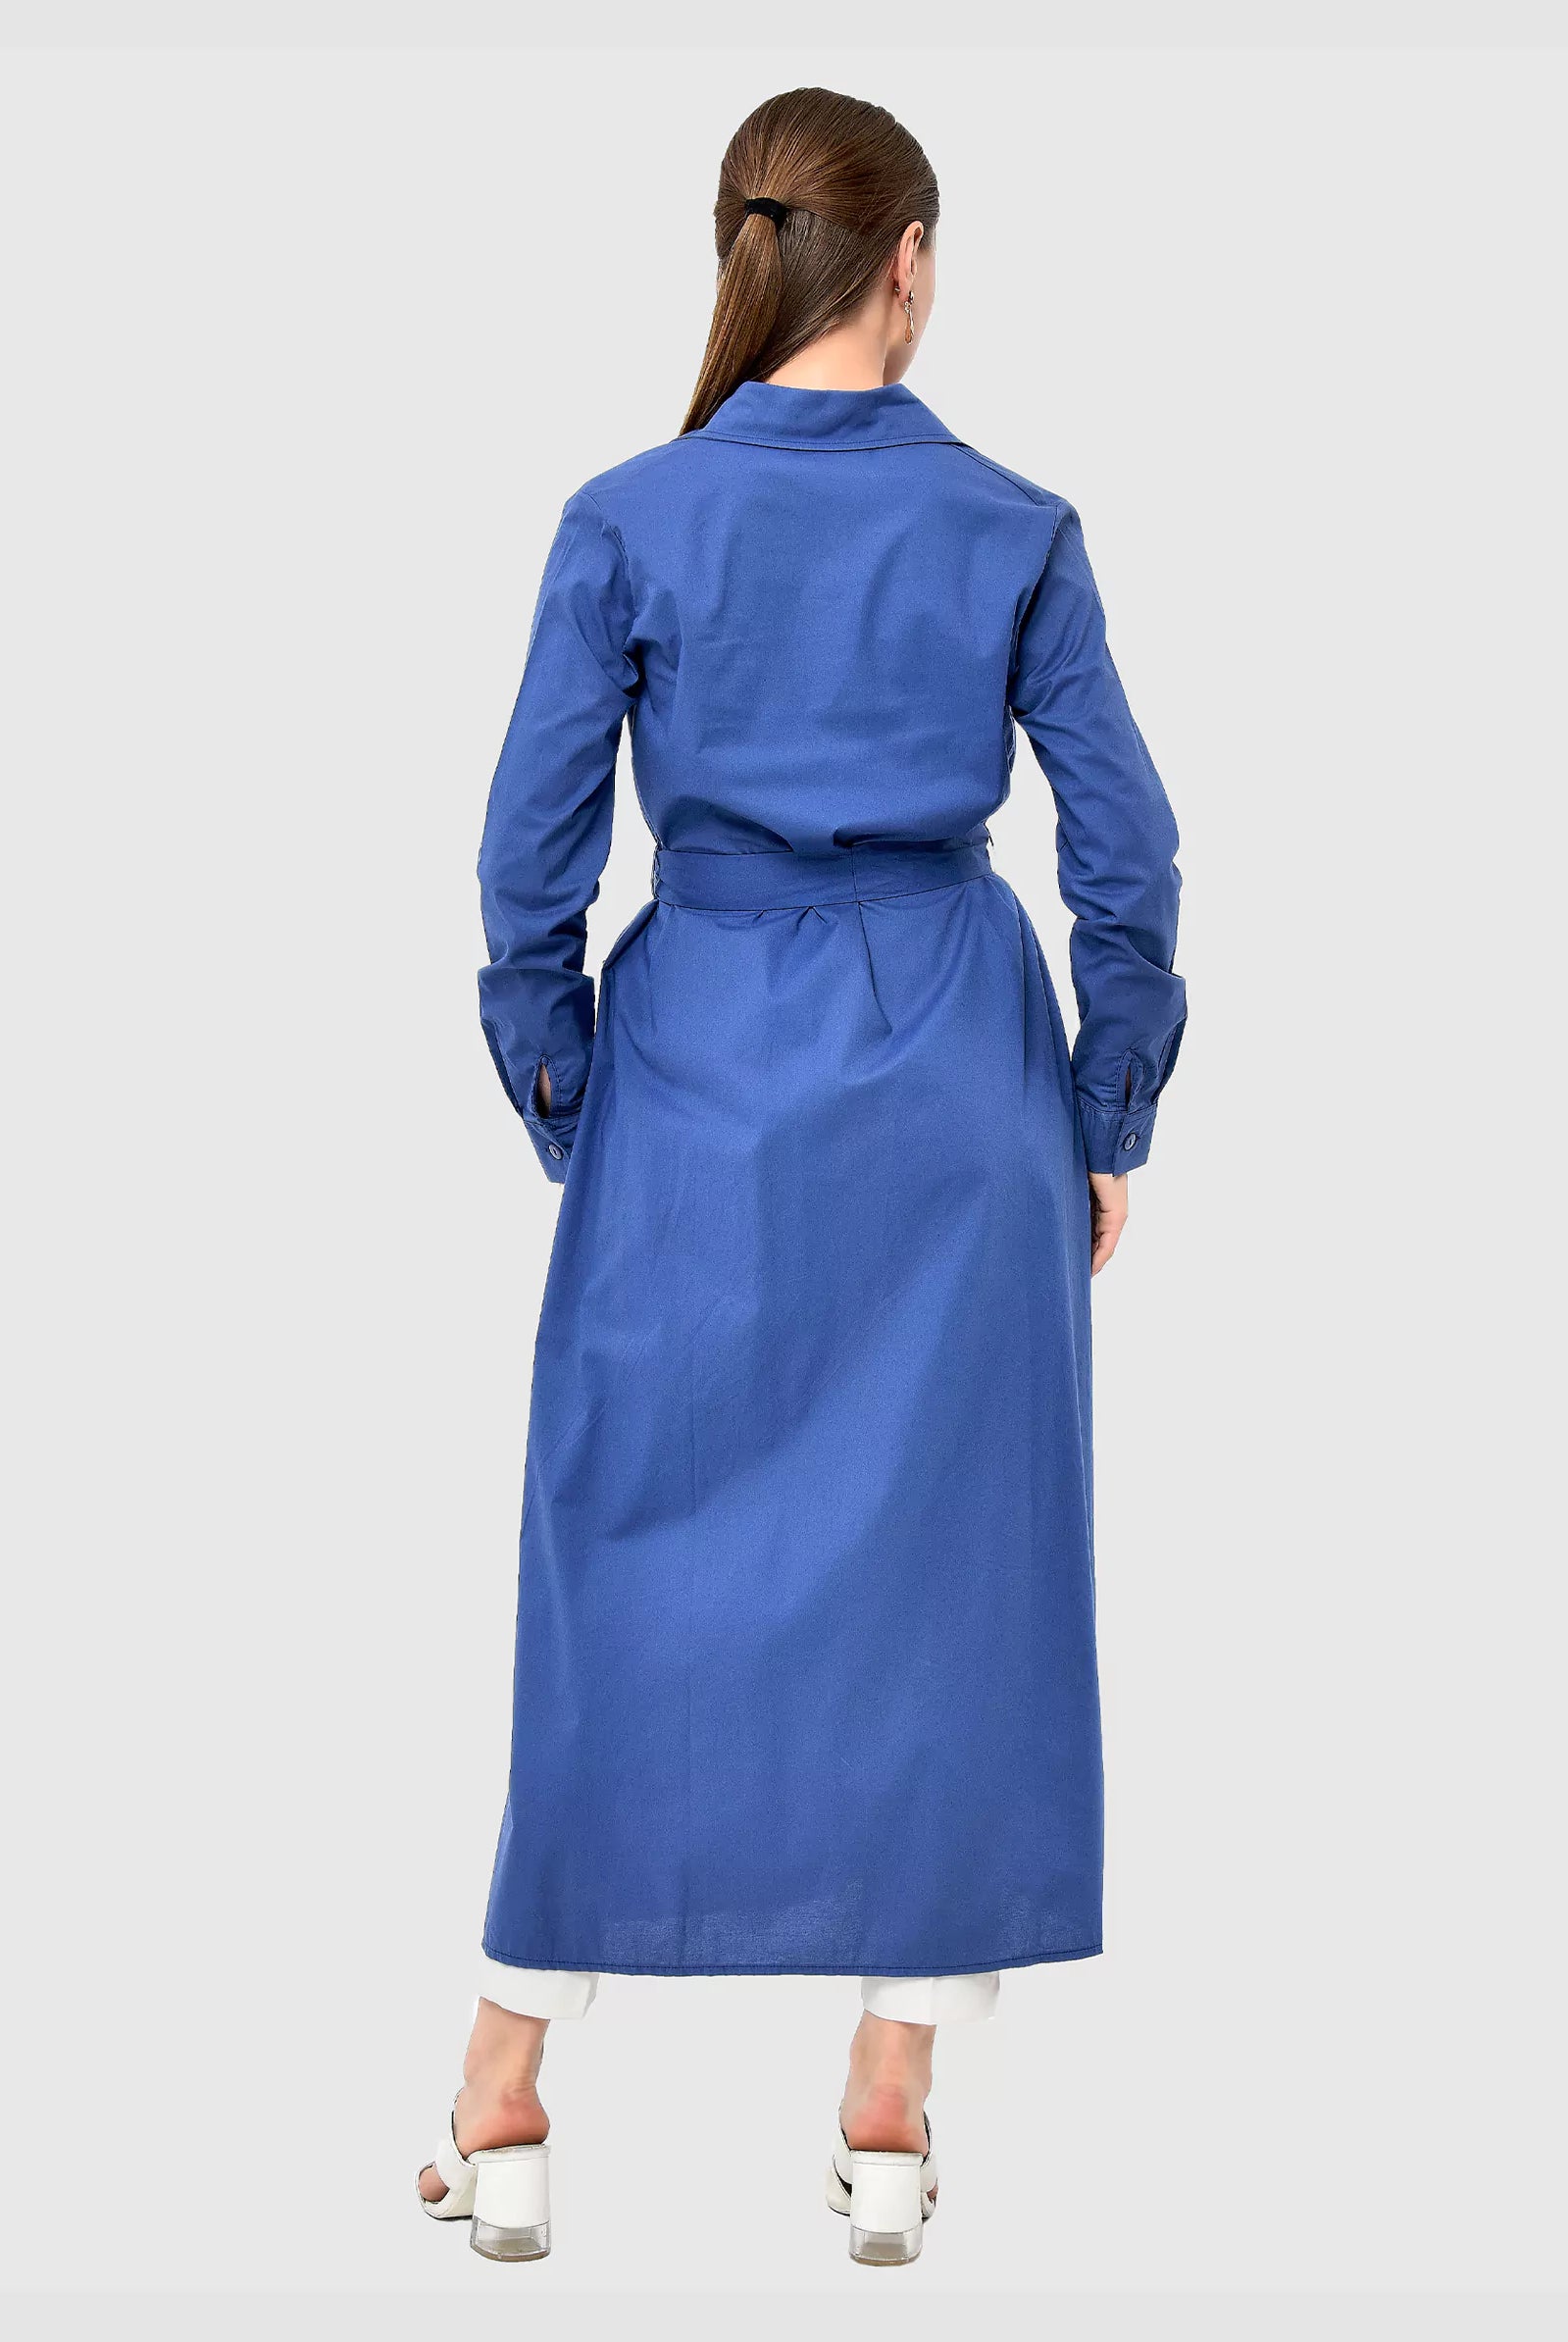 blue jacket for women